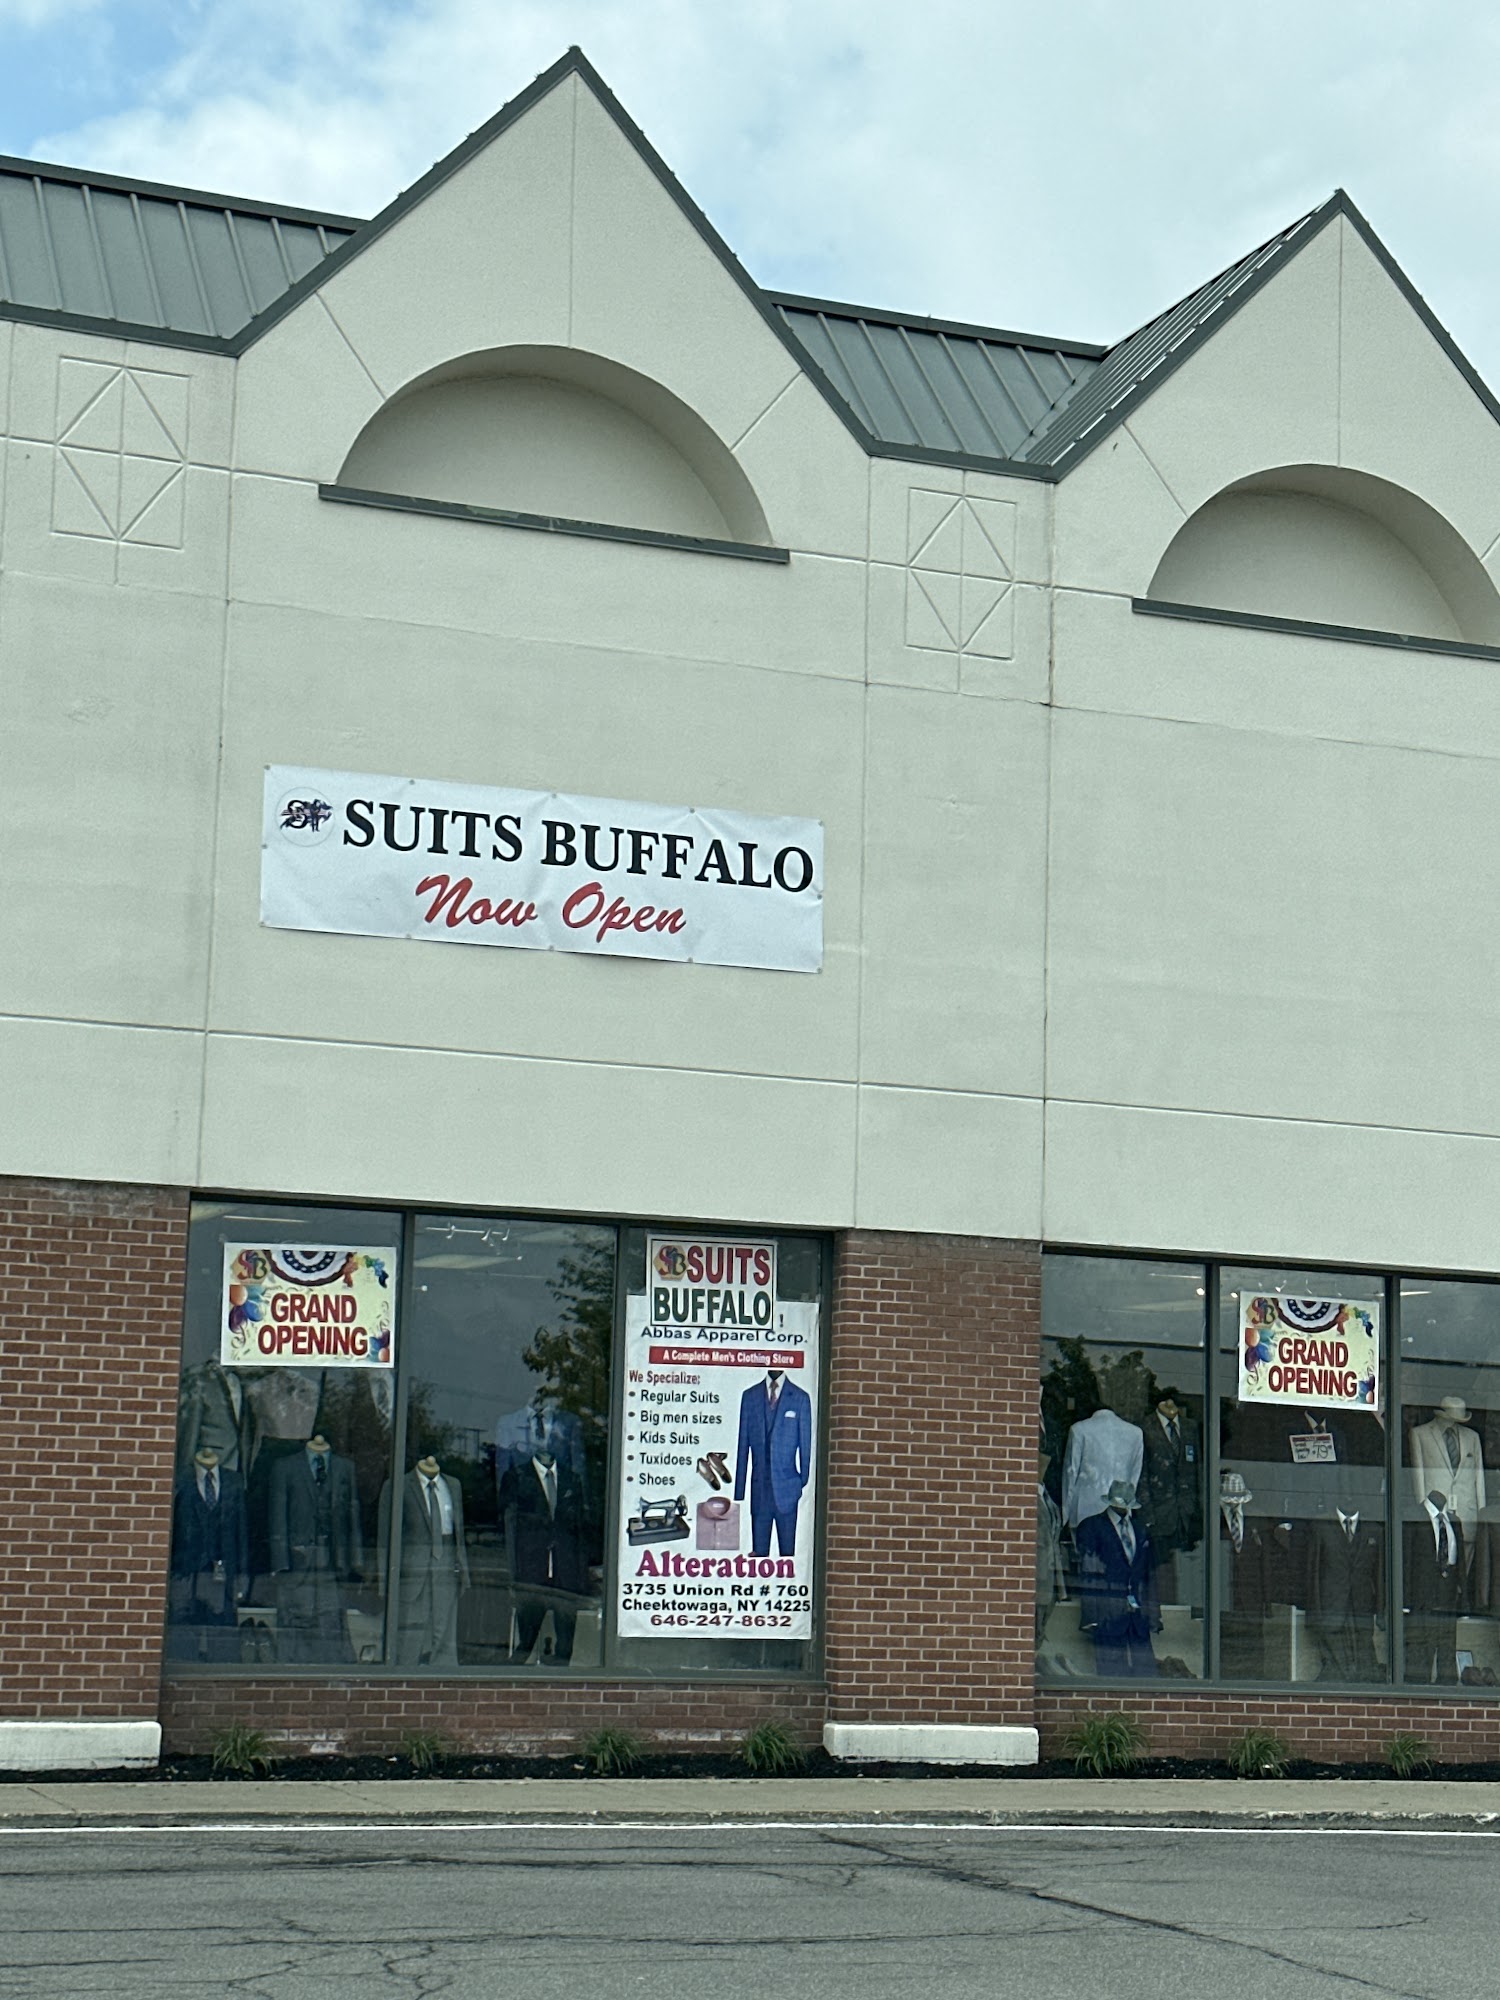 Suits Buffalo